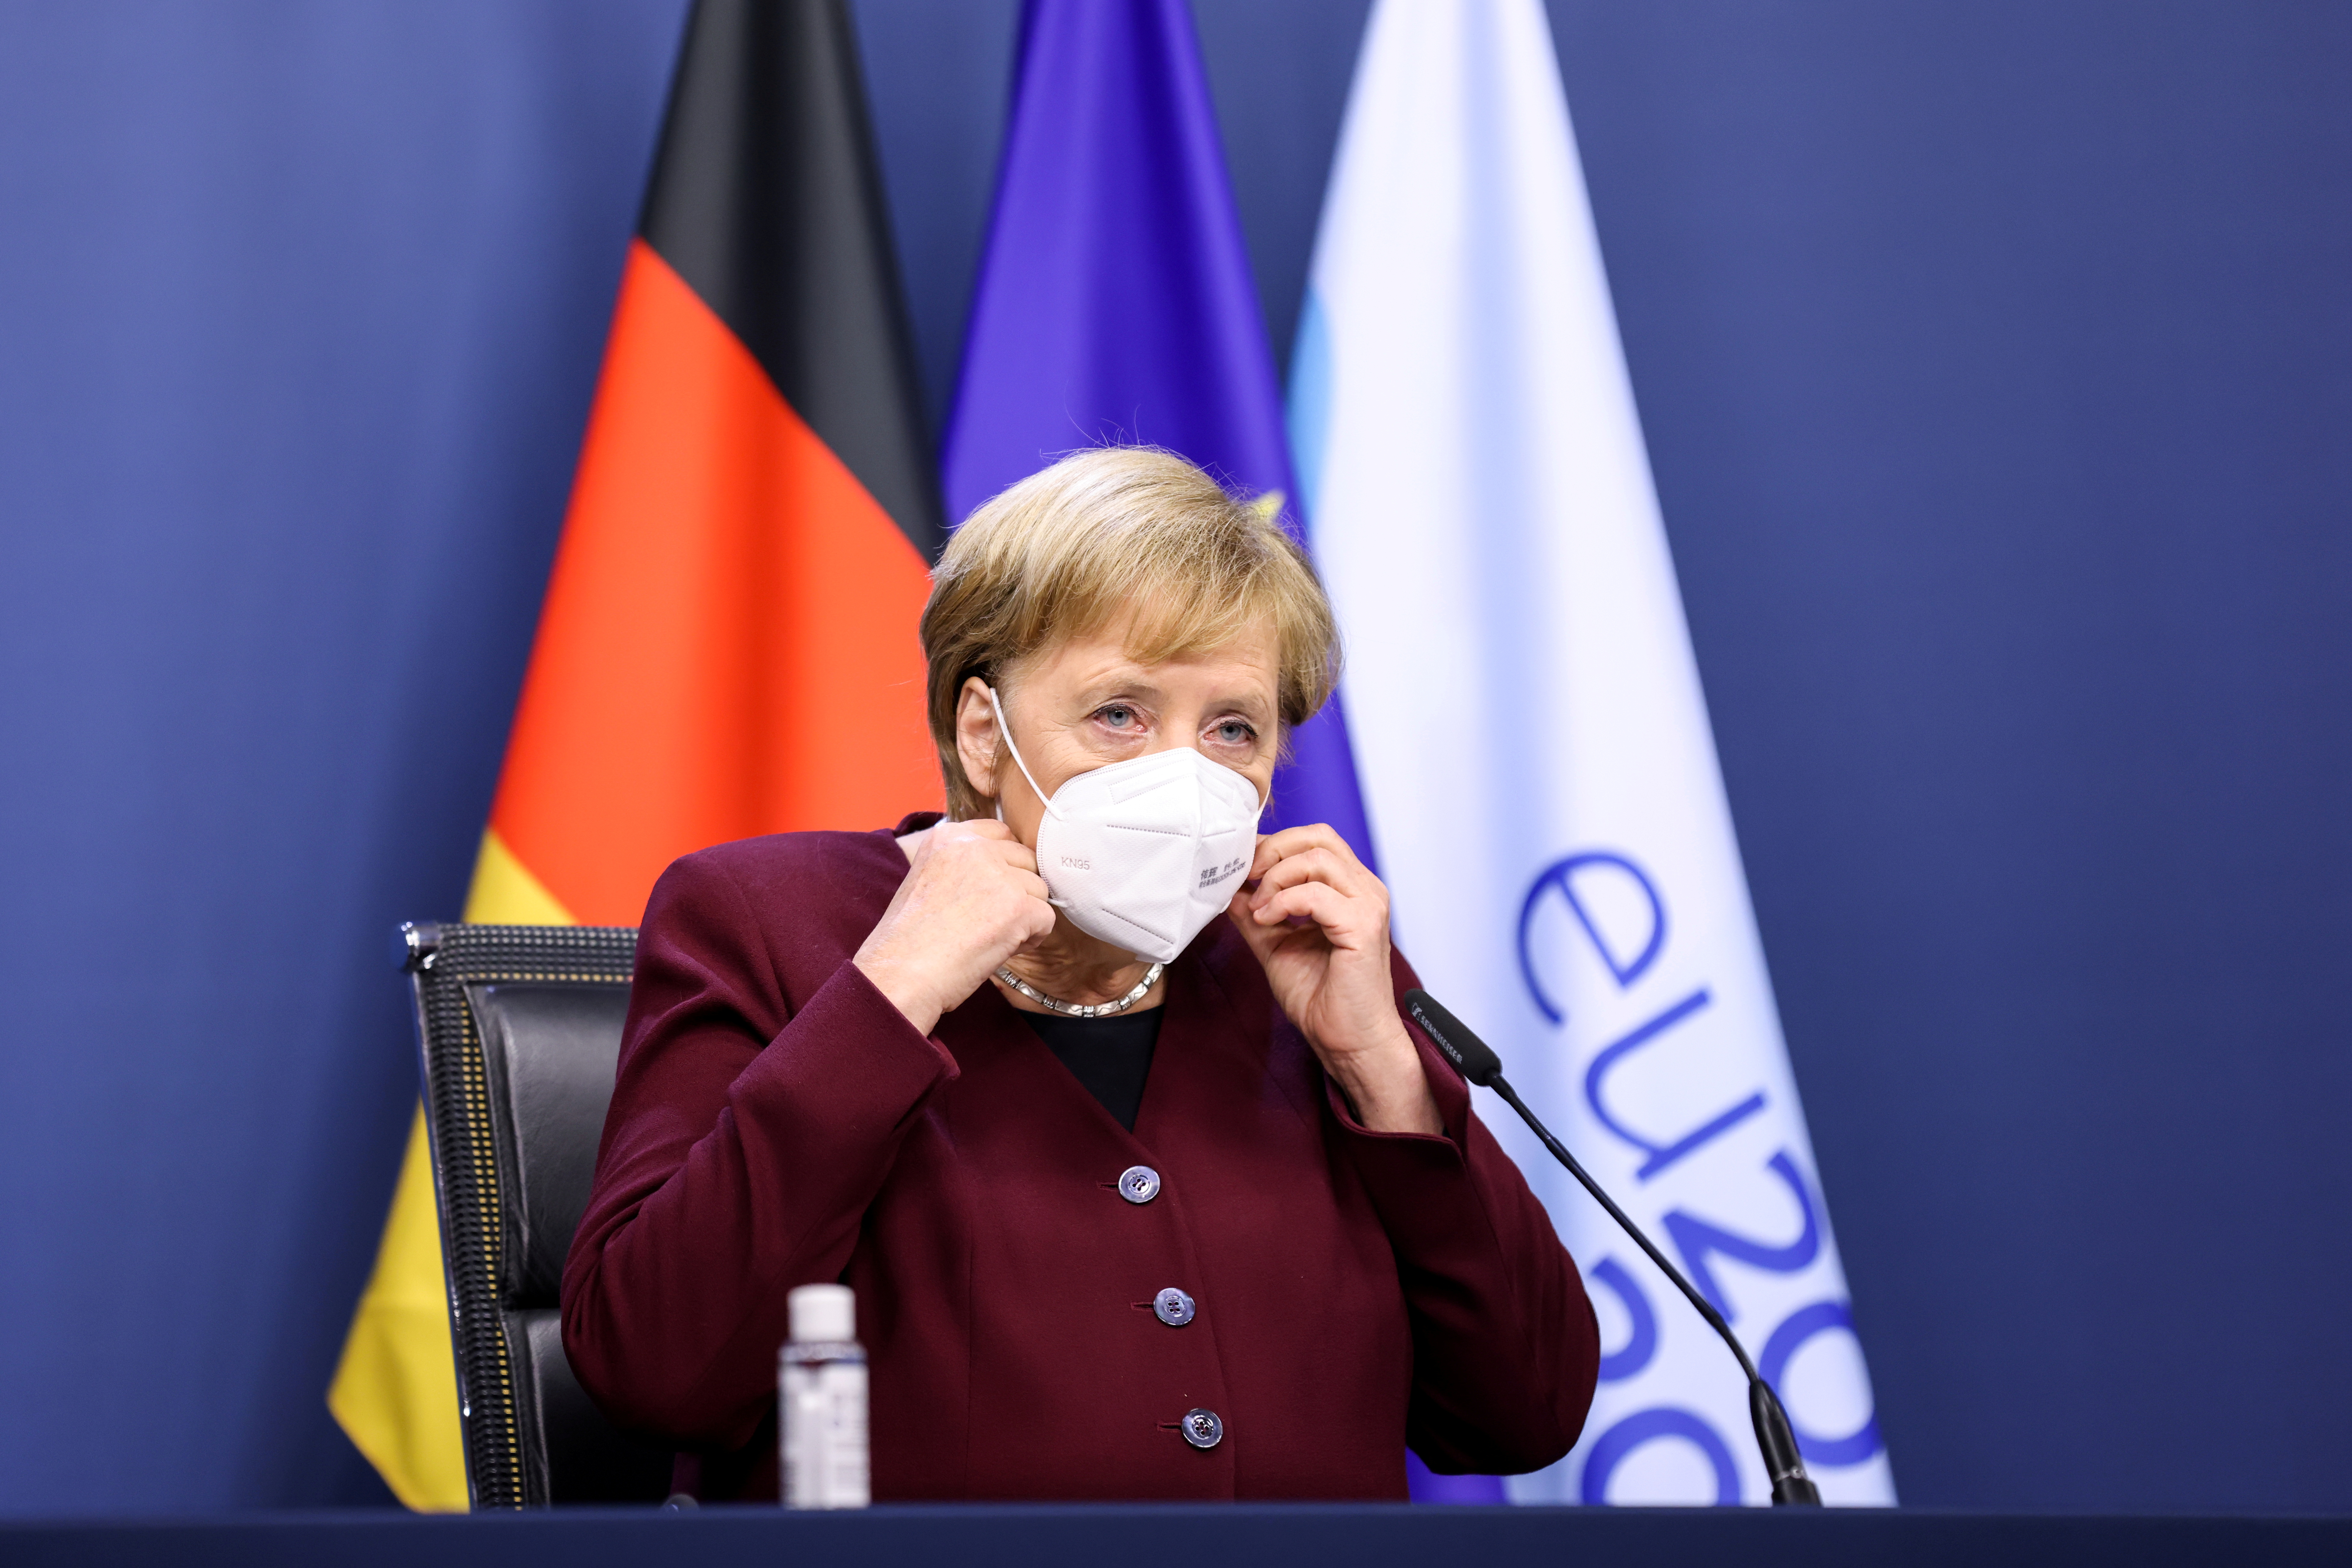 La canciller Angela Merkel. Kenzo Tribouillard/Pool via REUTERS/File Photo